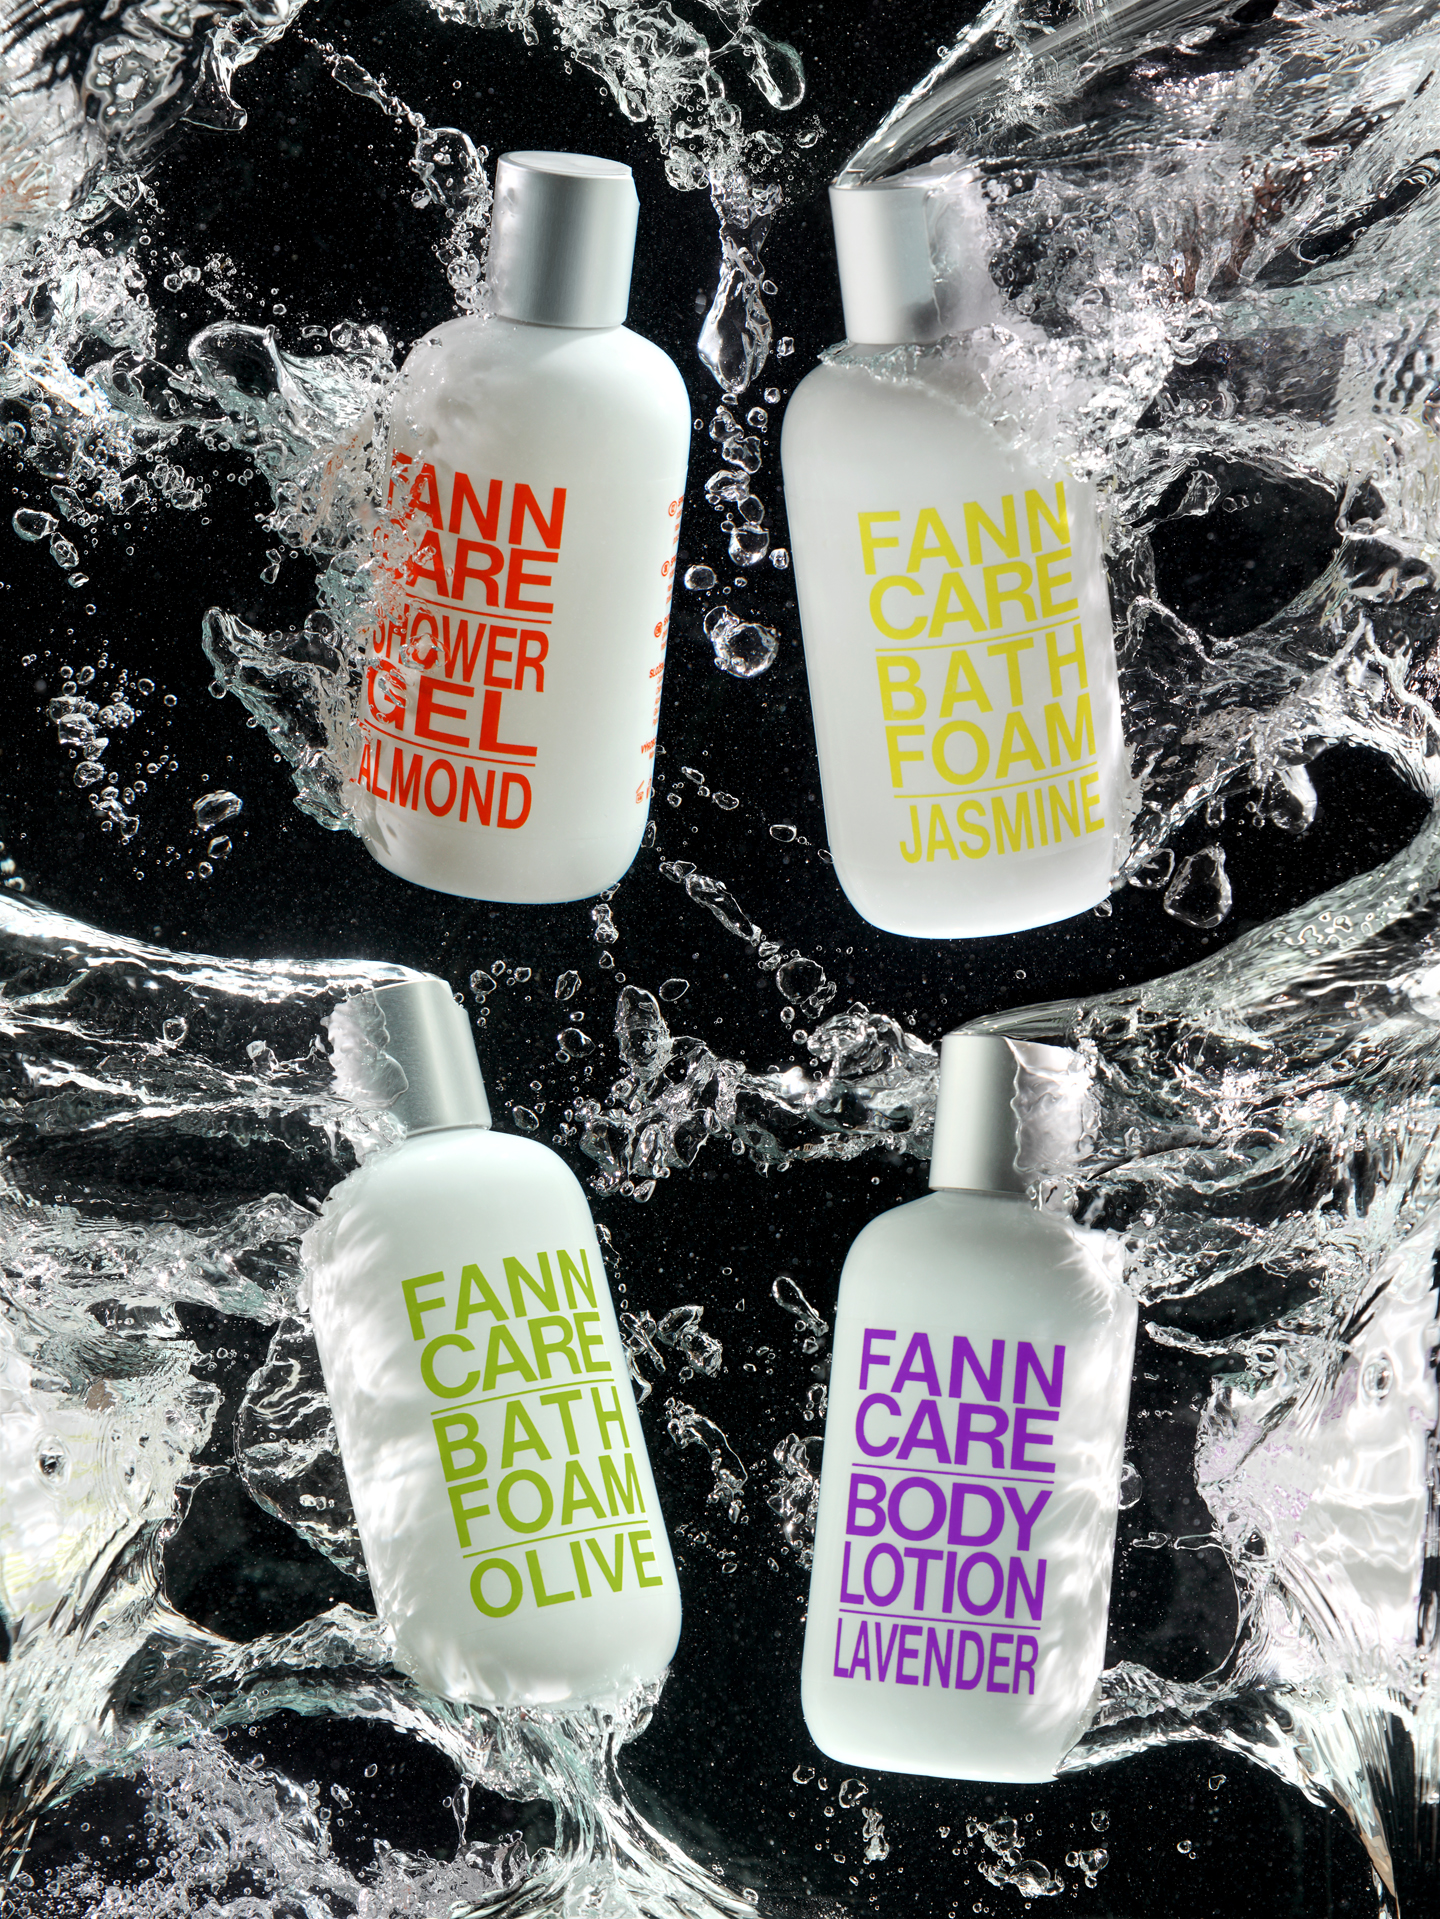 Parfumerie Fann - tvorba www stránek, Fotografie